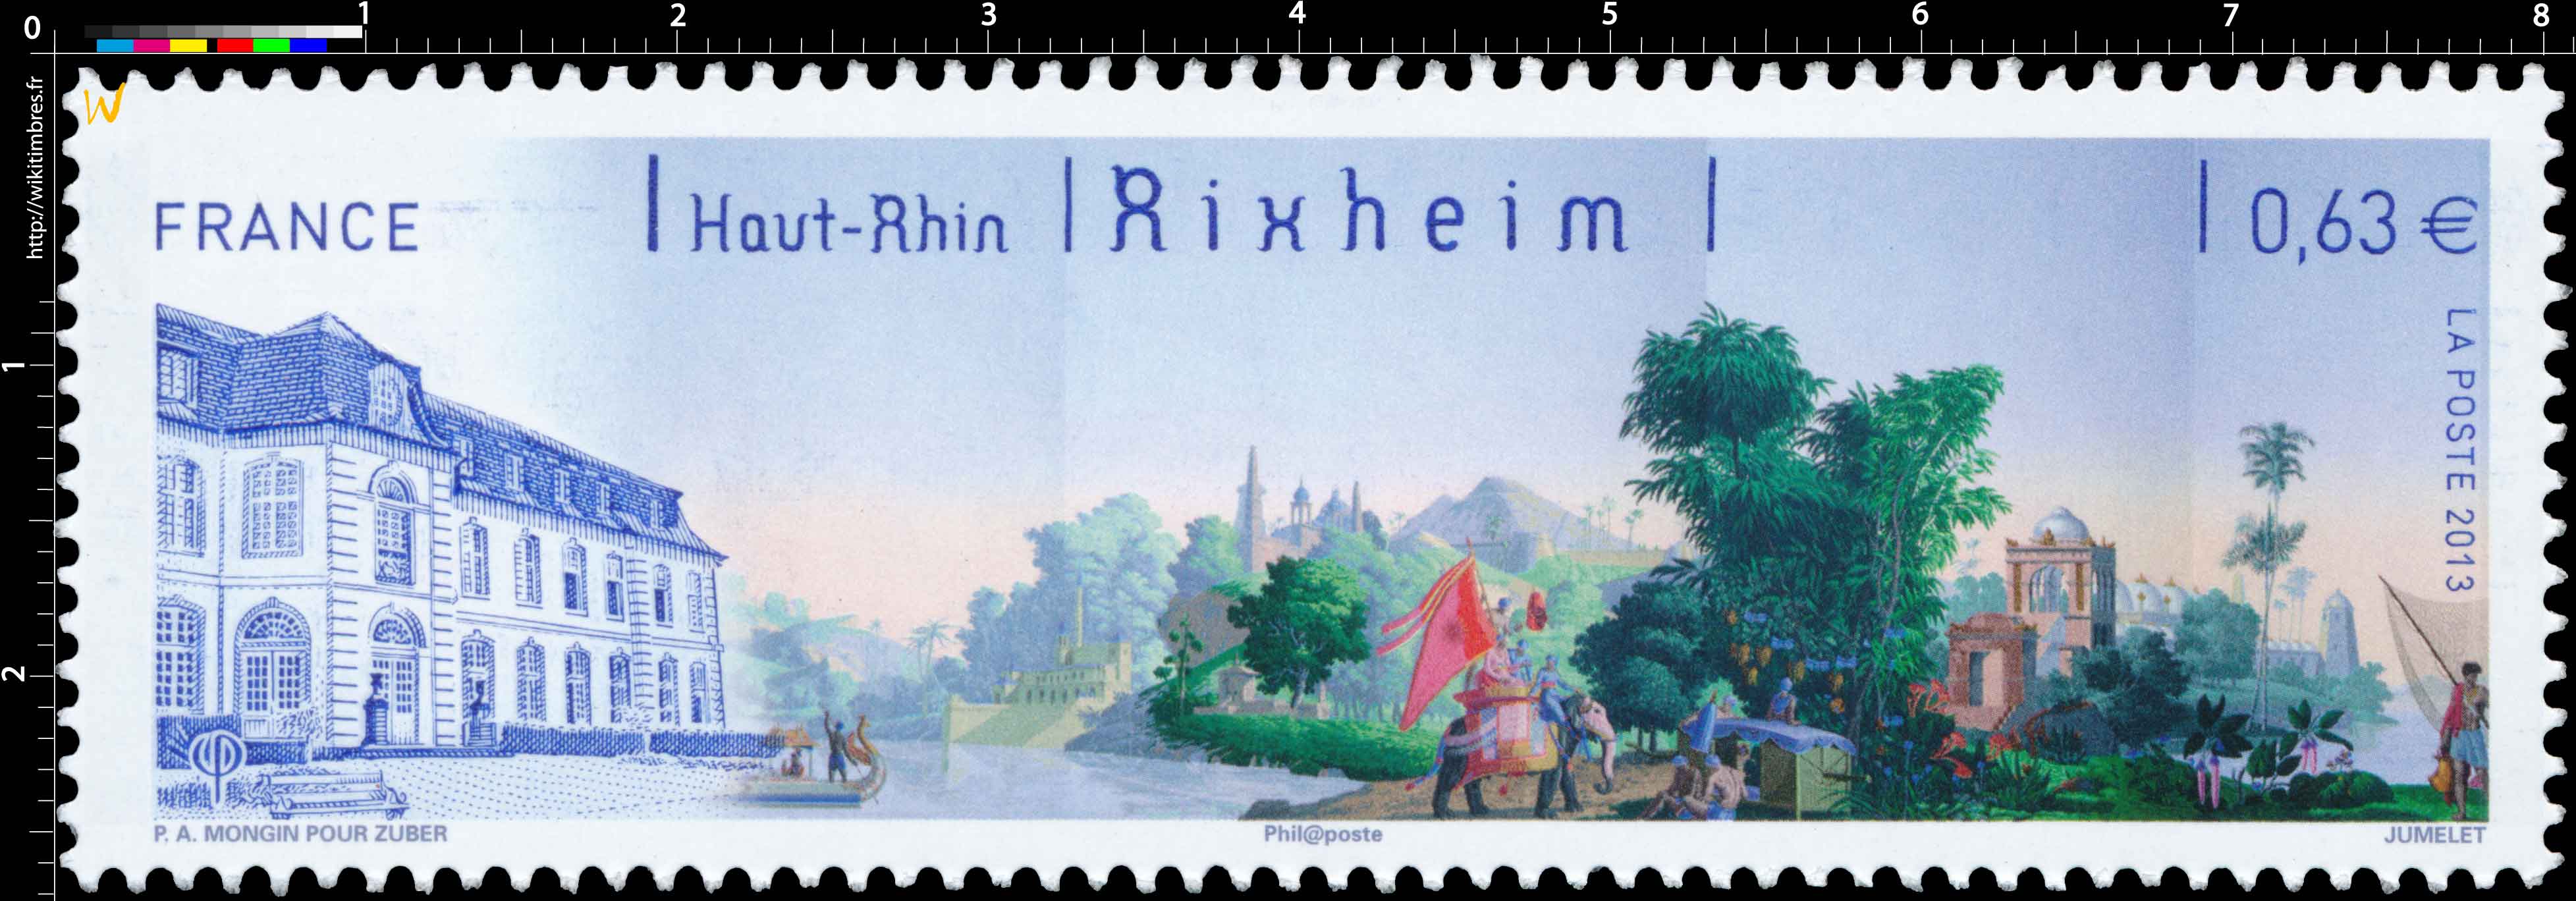 2013 Rixheim - Haut-Rhin